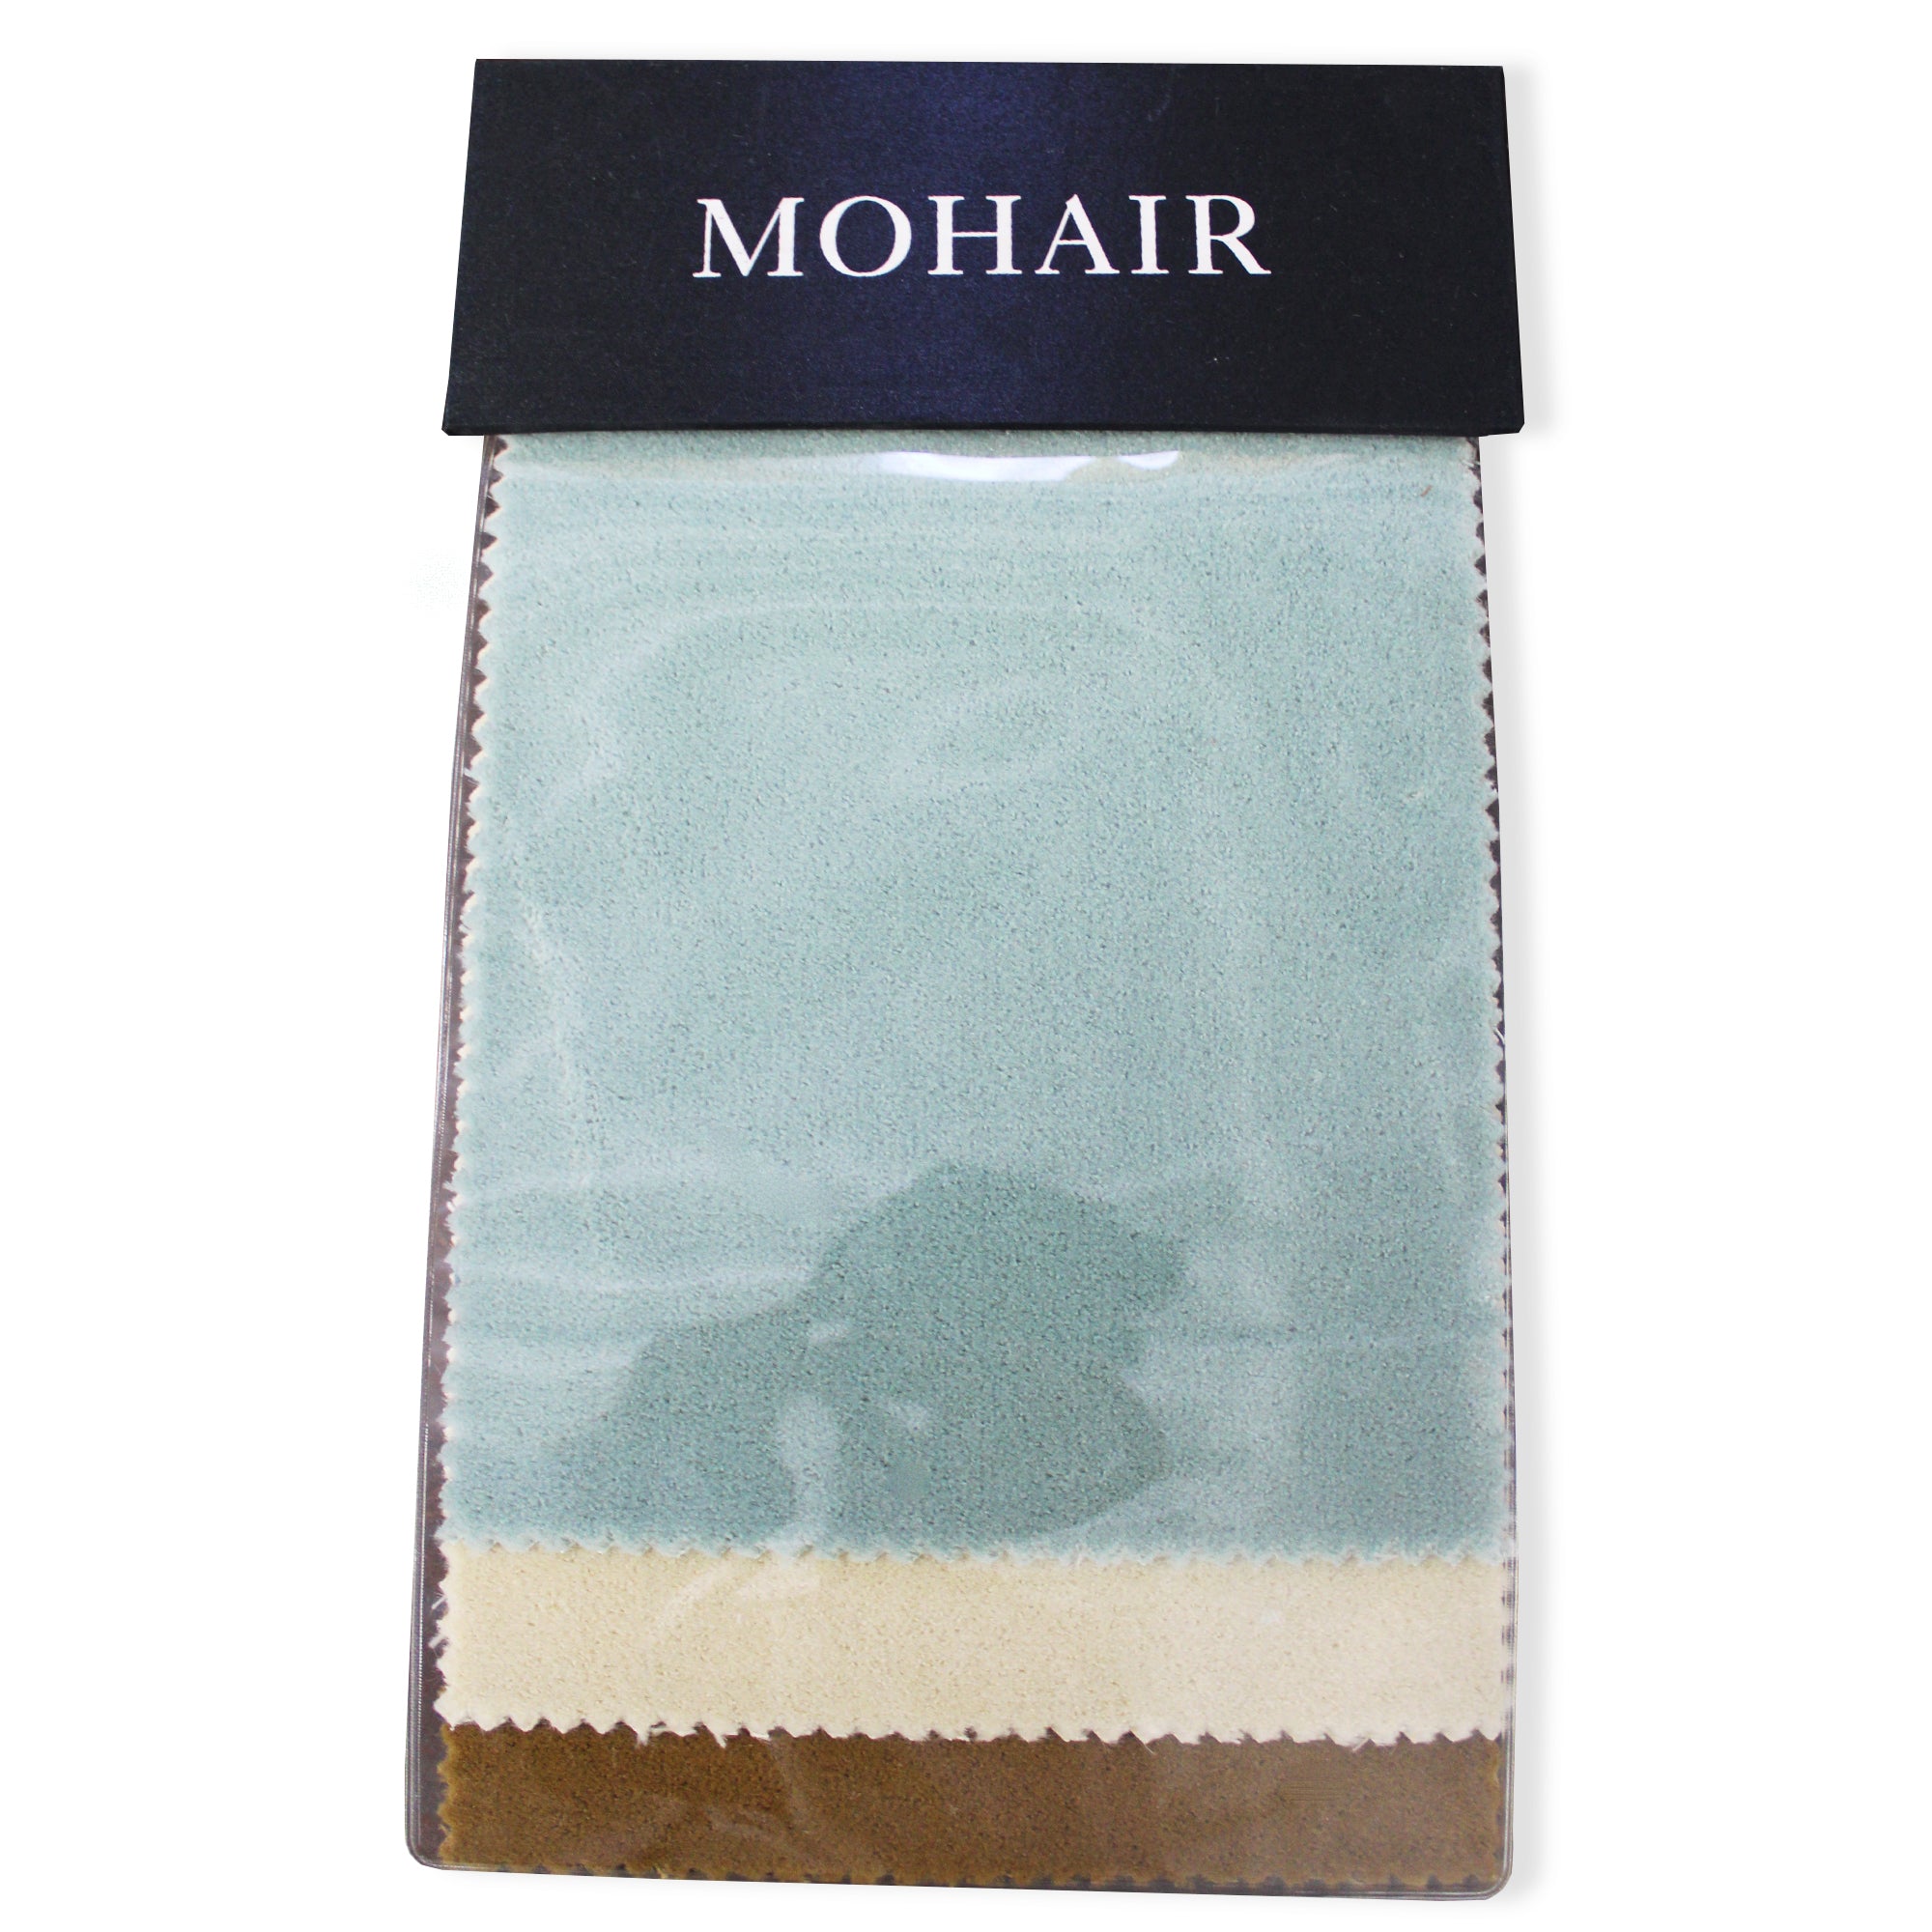 Mohair | Sample Book